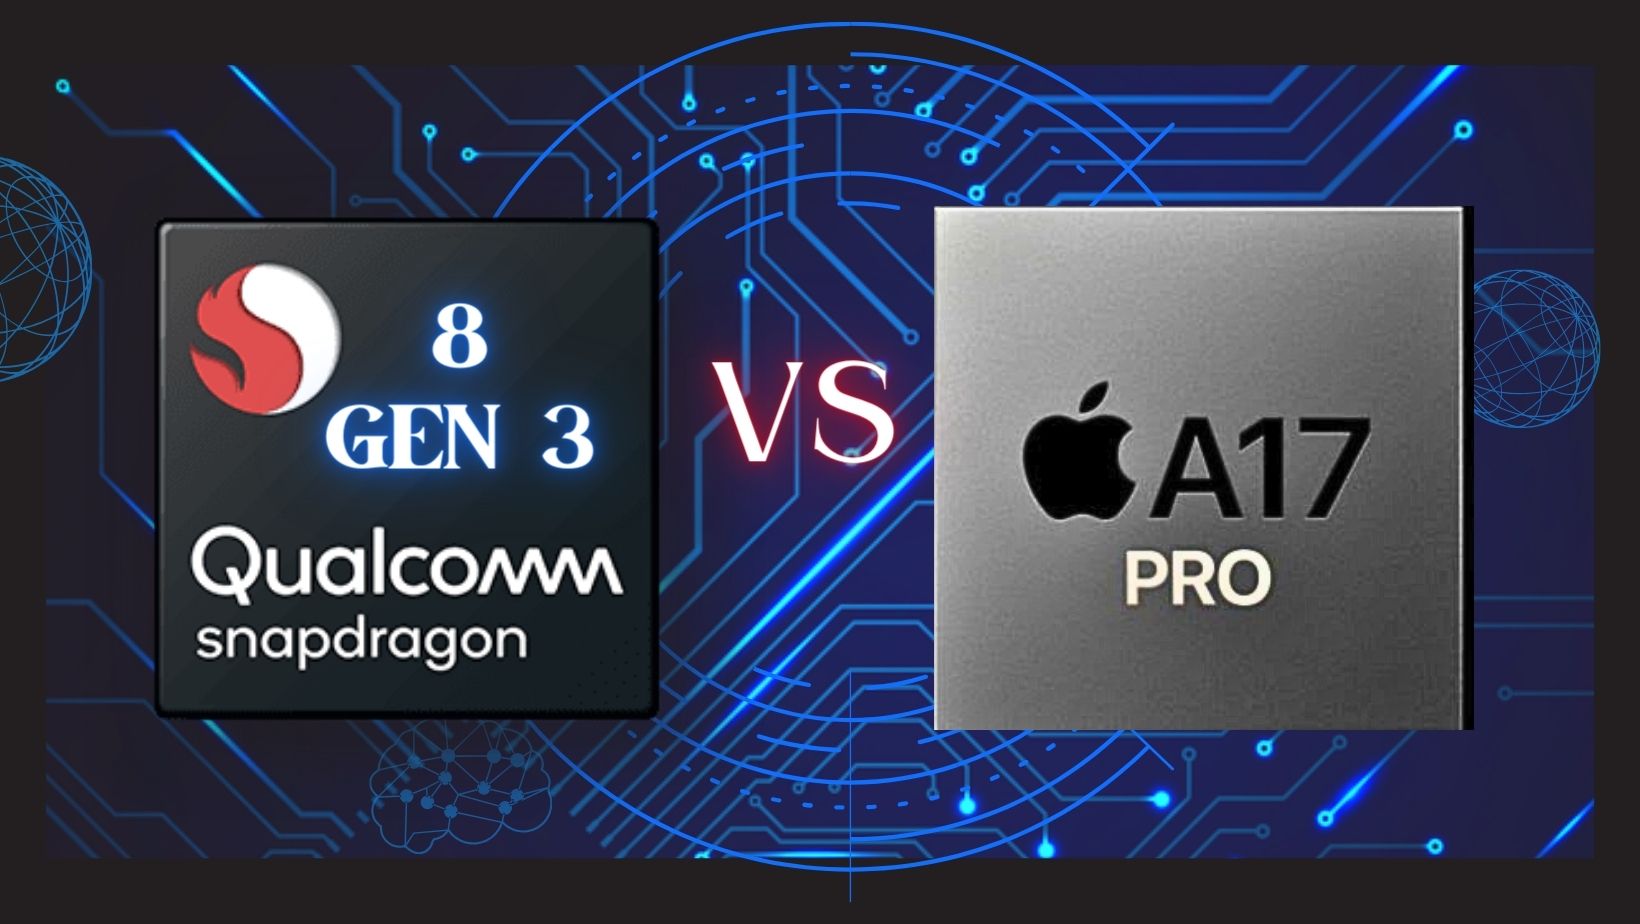 Snapdragon 8 Gen 3 ضد Apple A17 Pro مواجهة متساوية بشكل مفاجئ